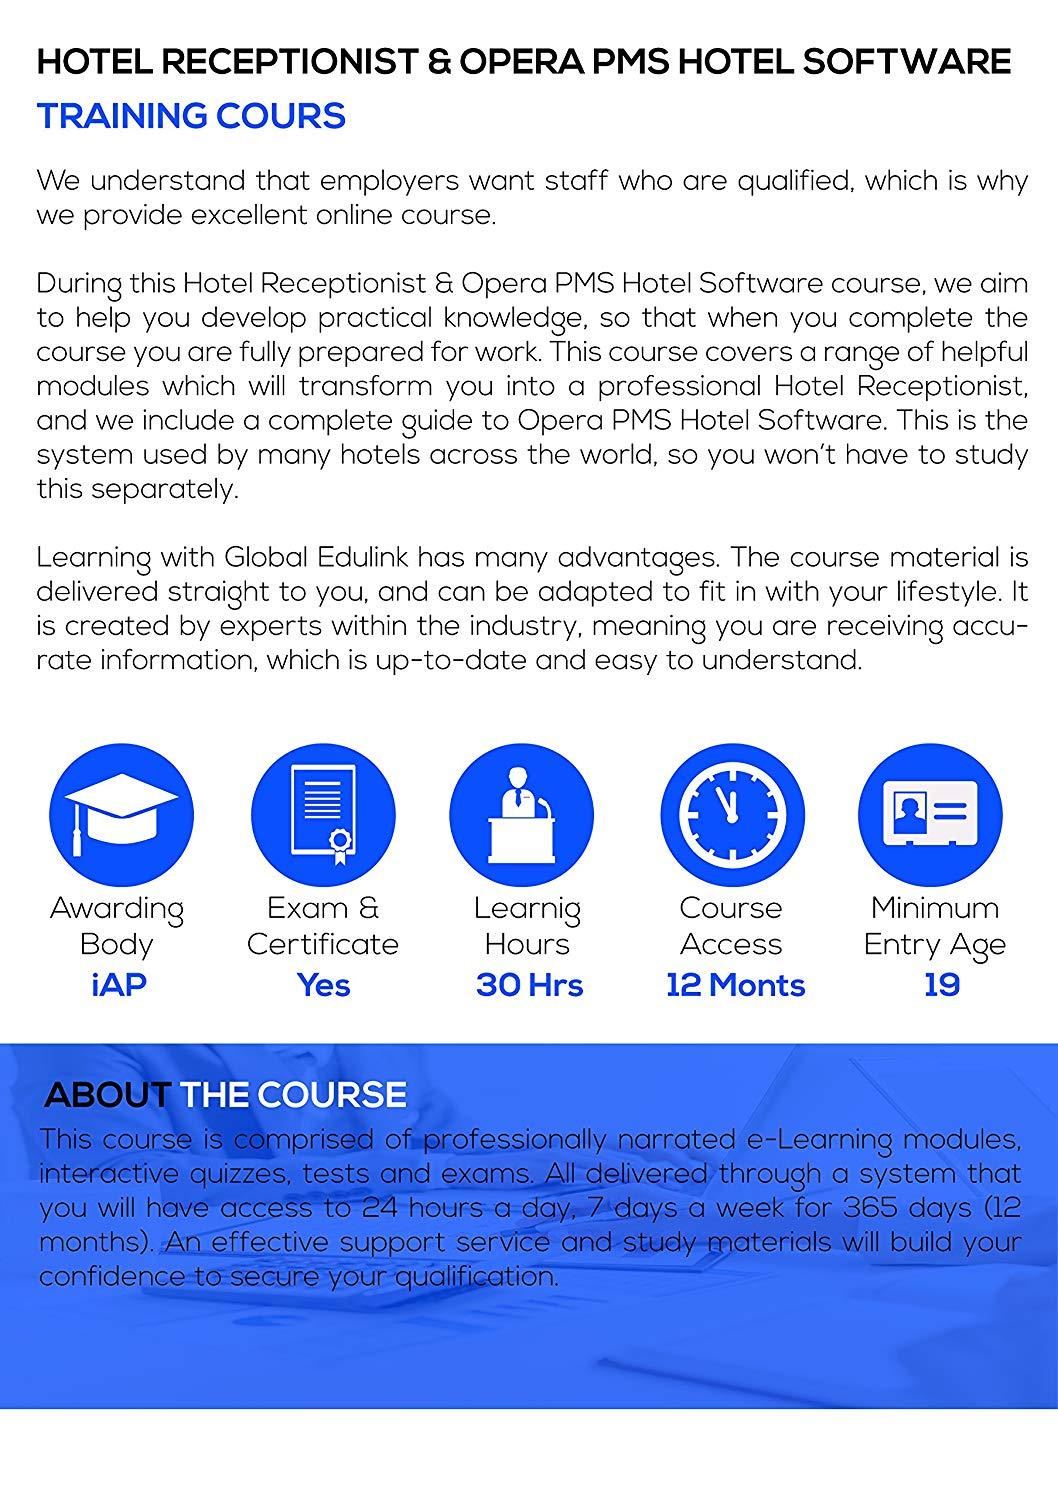 Opera PMS Logo - Opera PMS Hotel Software Training Course [Online Code]: Amazon.co.uk ...